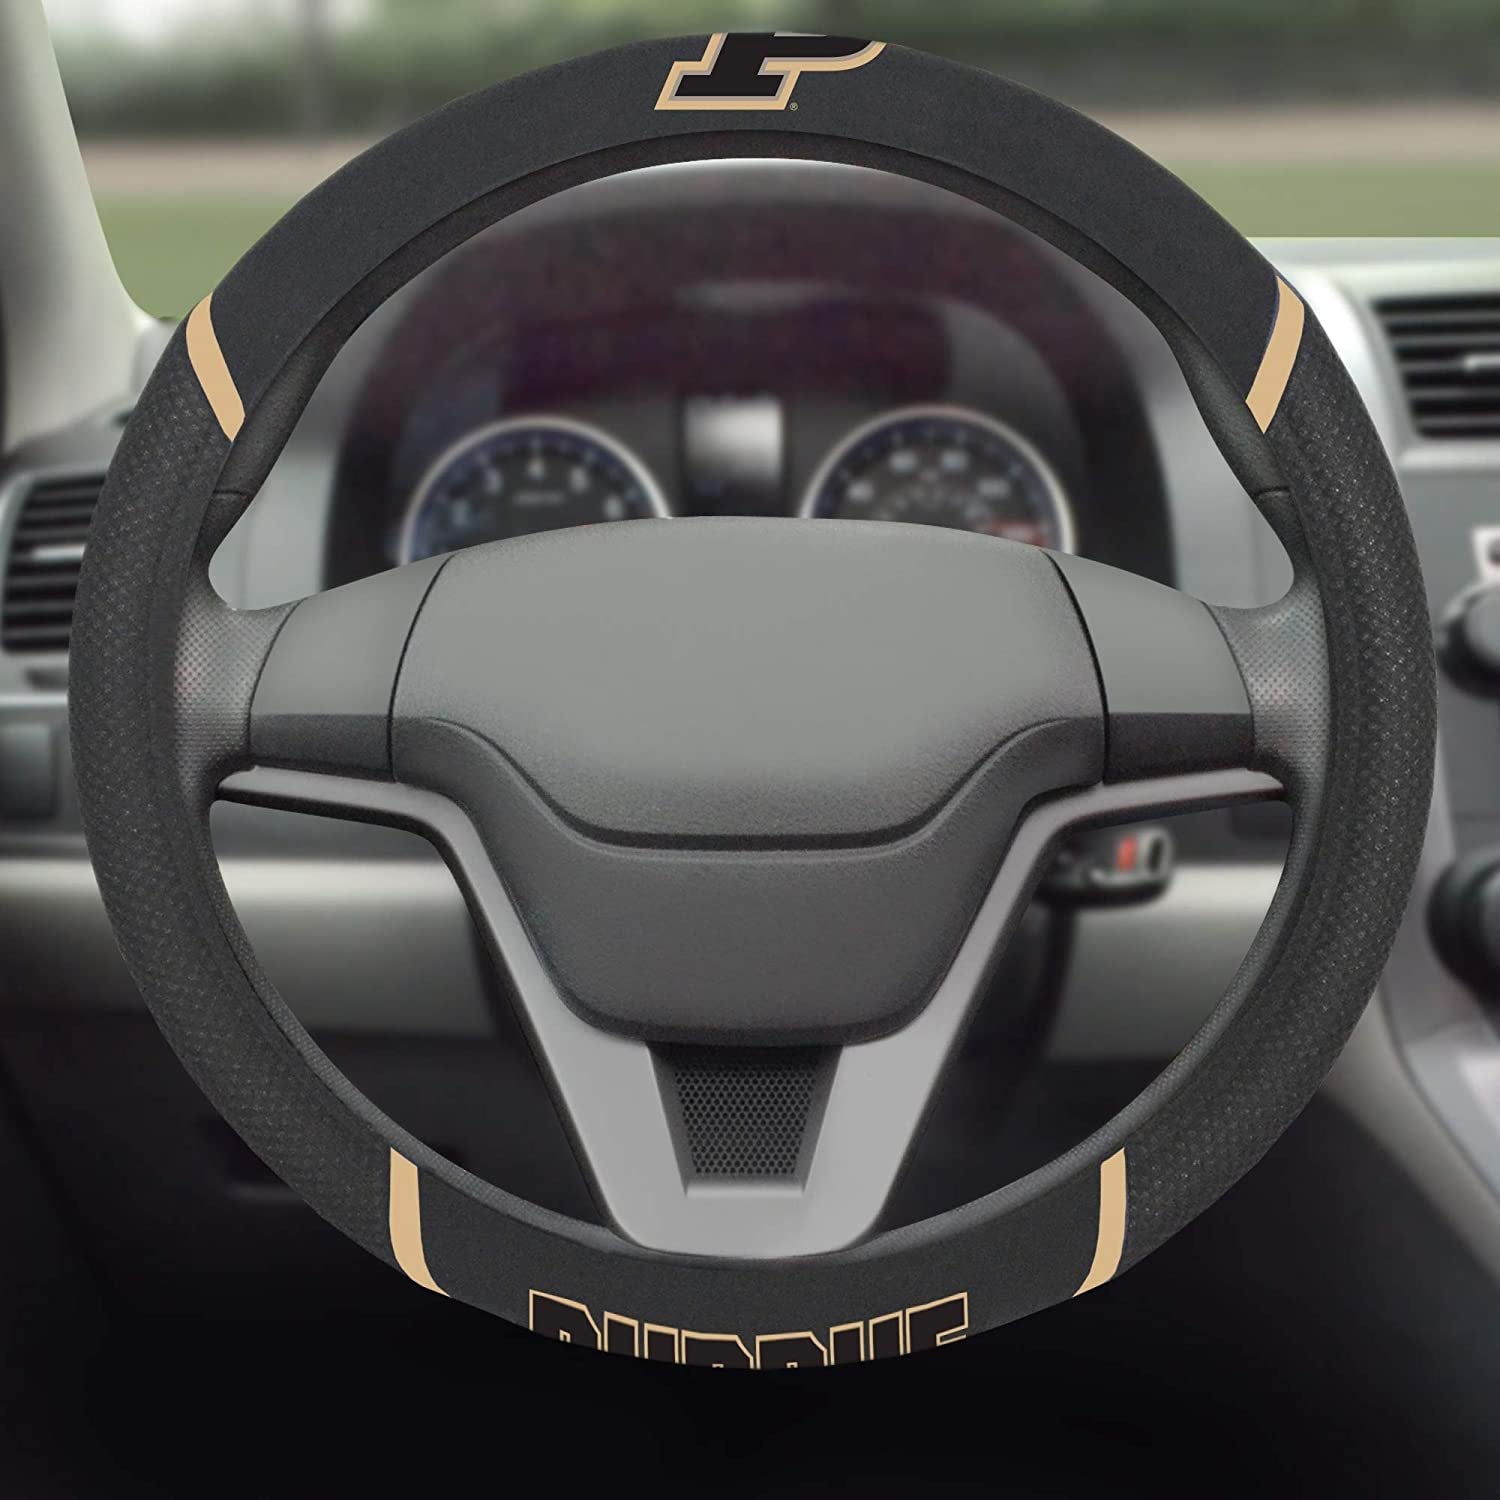 Purdue Boilermakers Steering Wheel Cover Premium Embroidered Black 15 Inch University